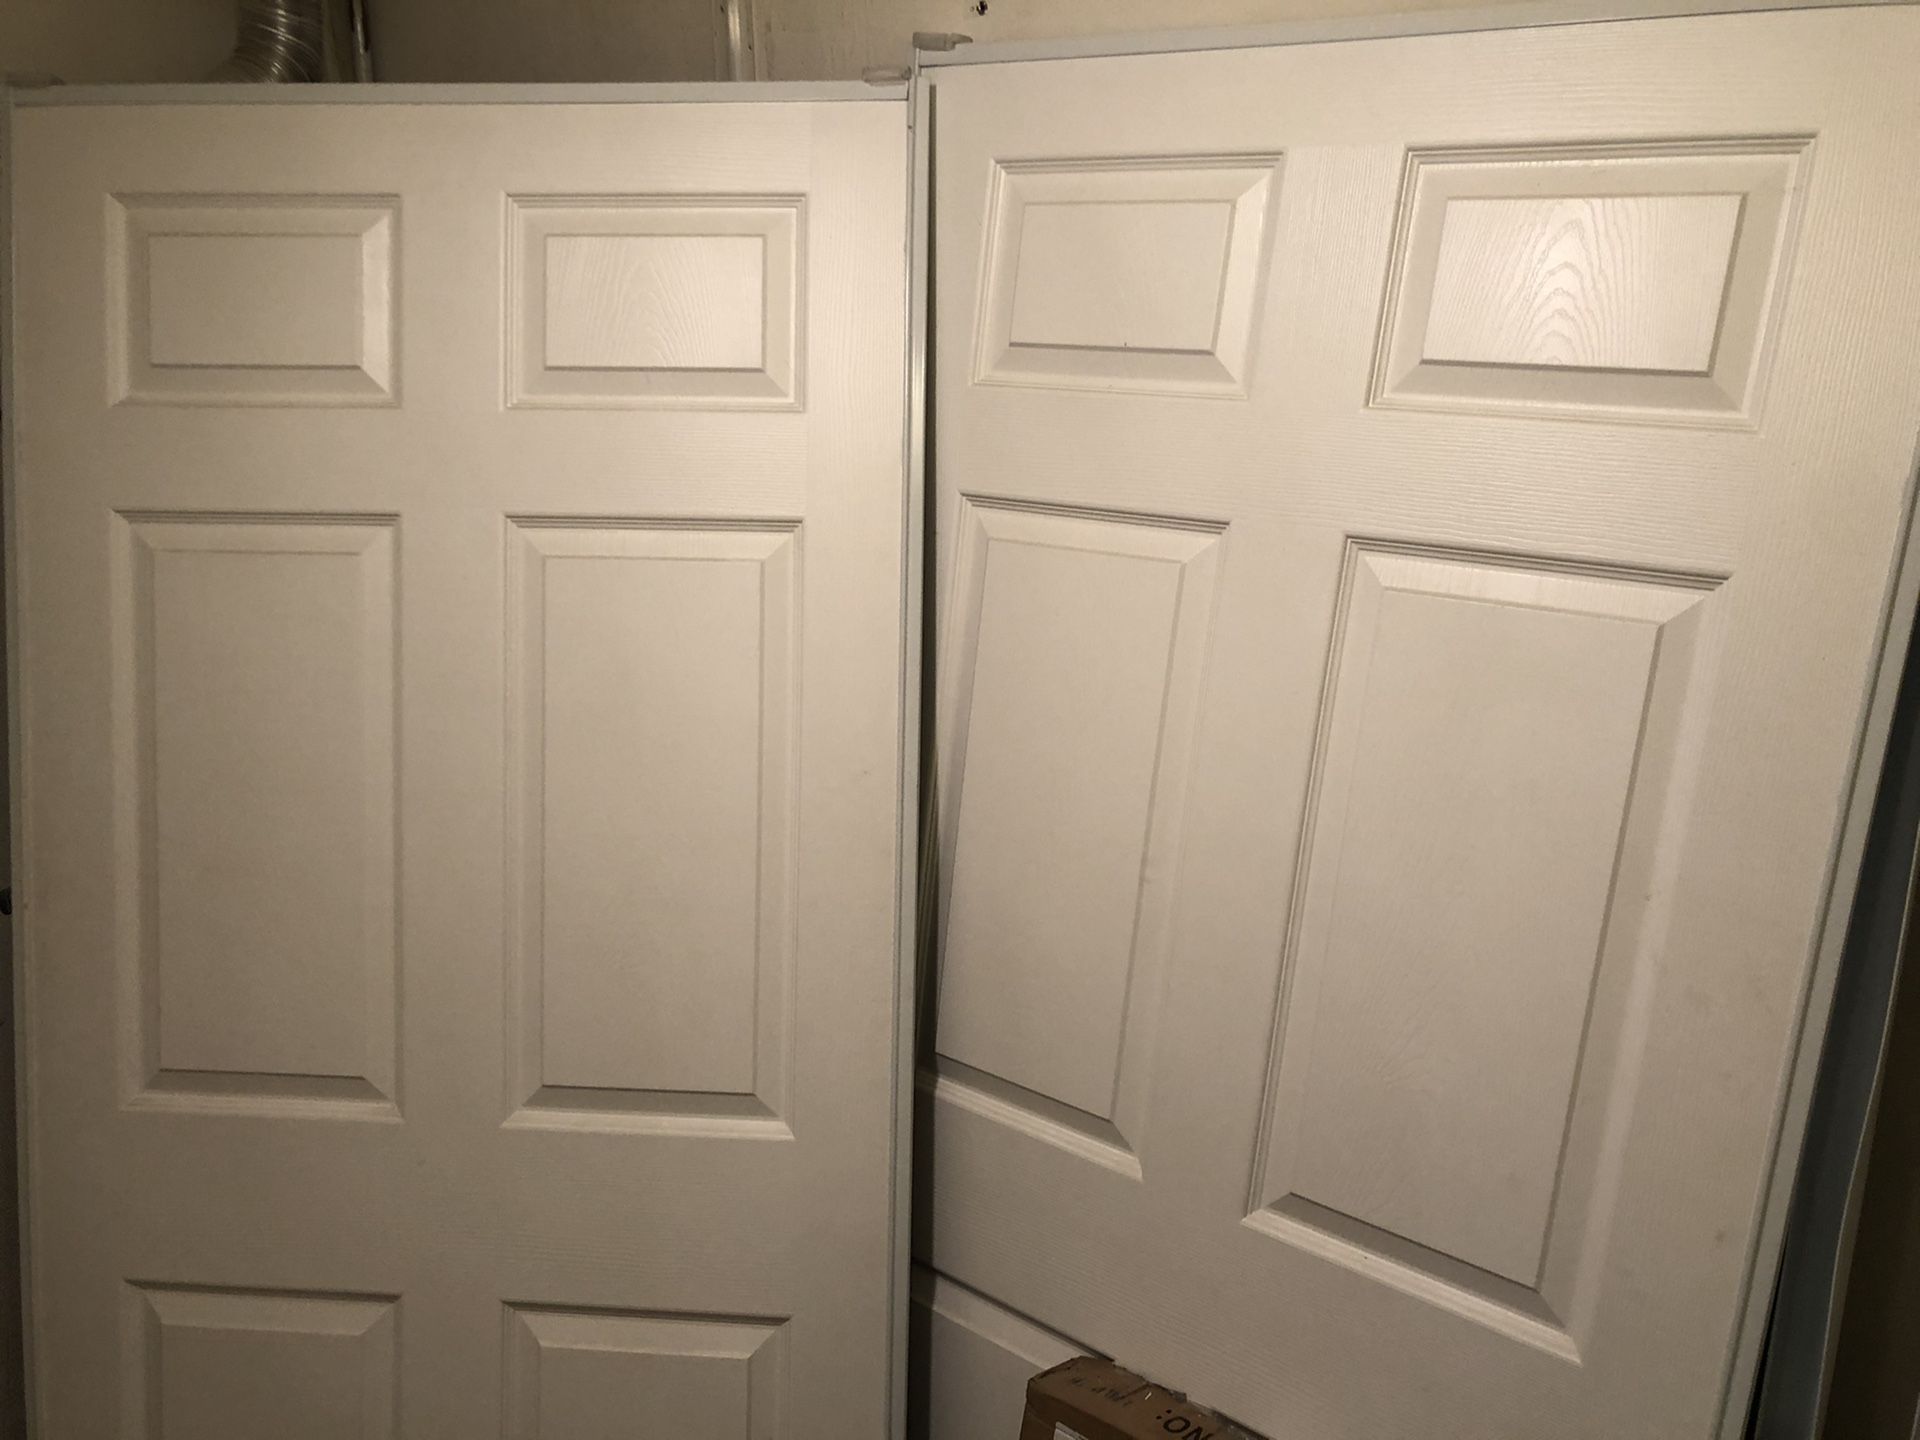 Closet sliding doors (2) 36 5/8 wide 80 1/8 long